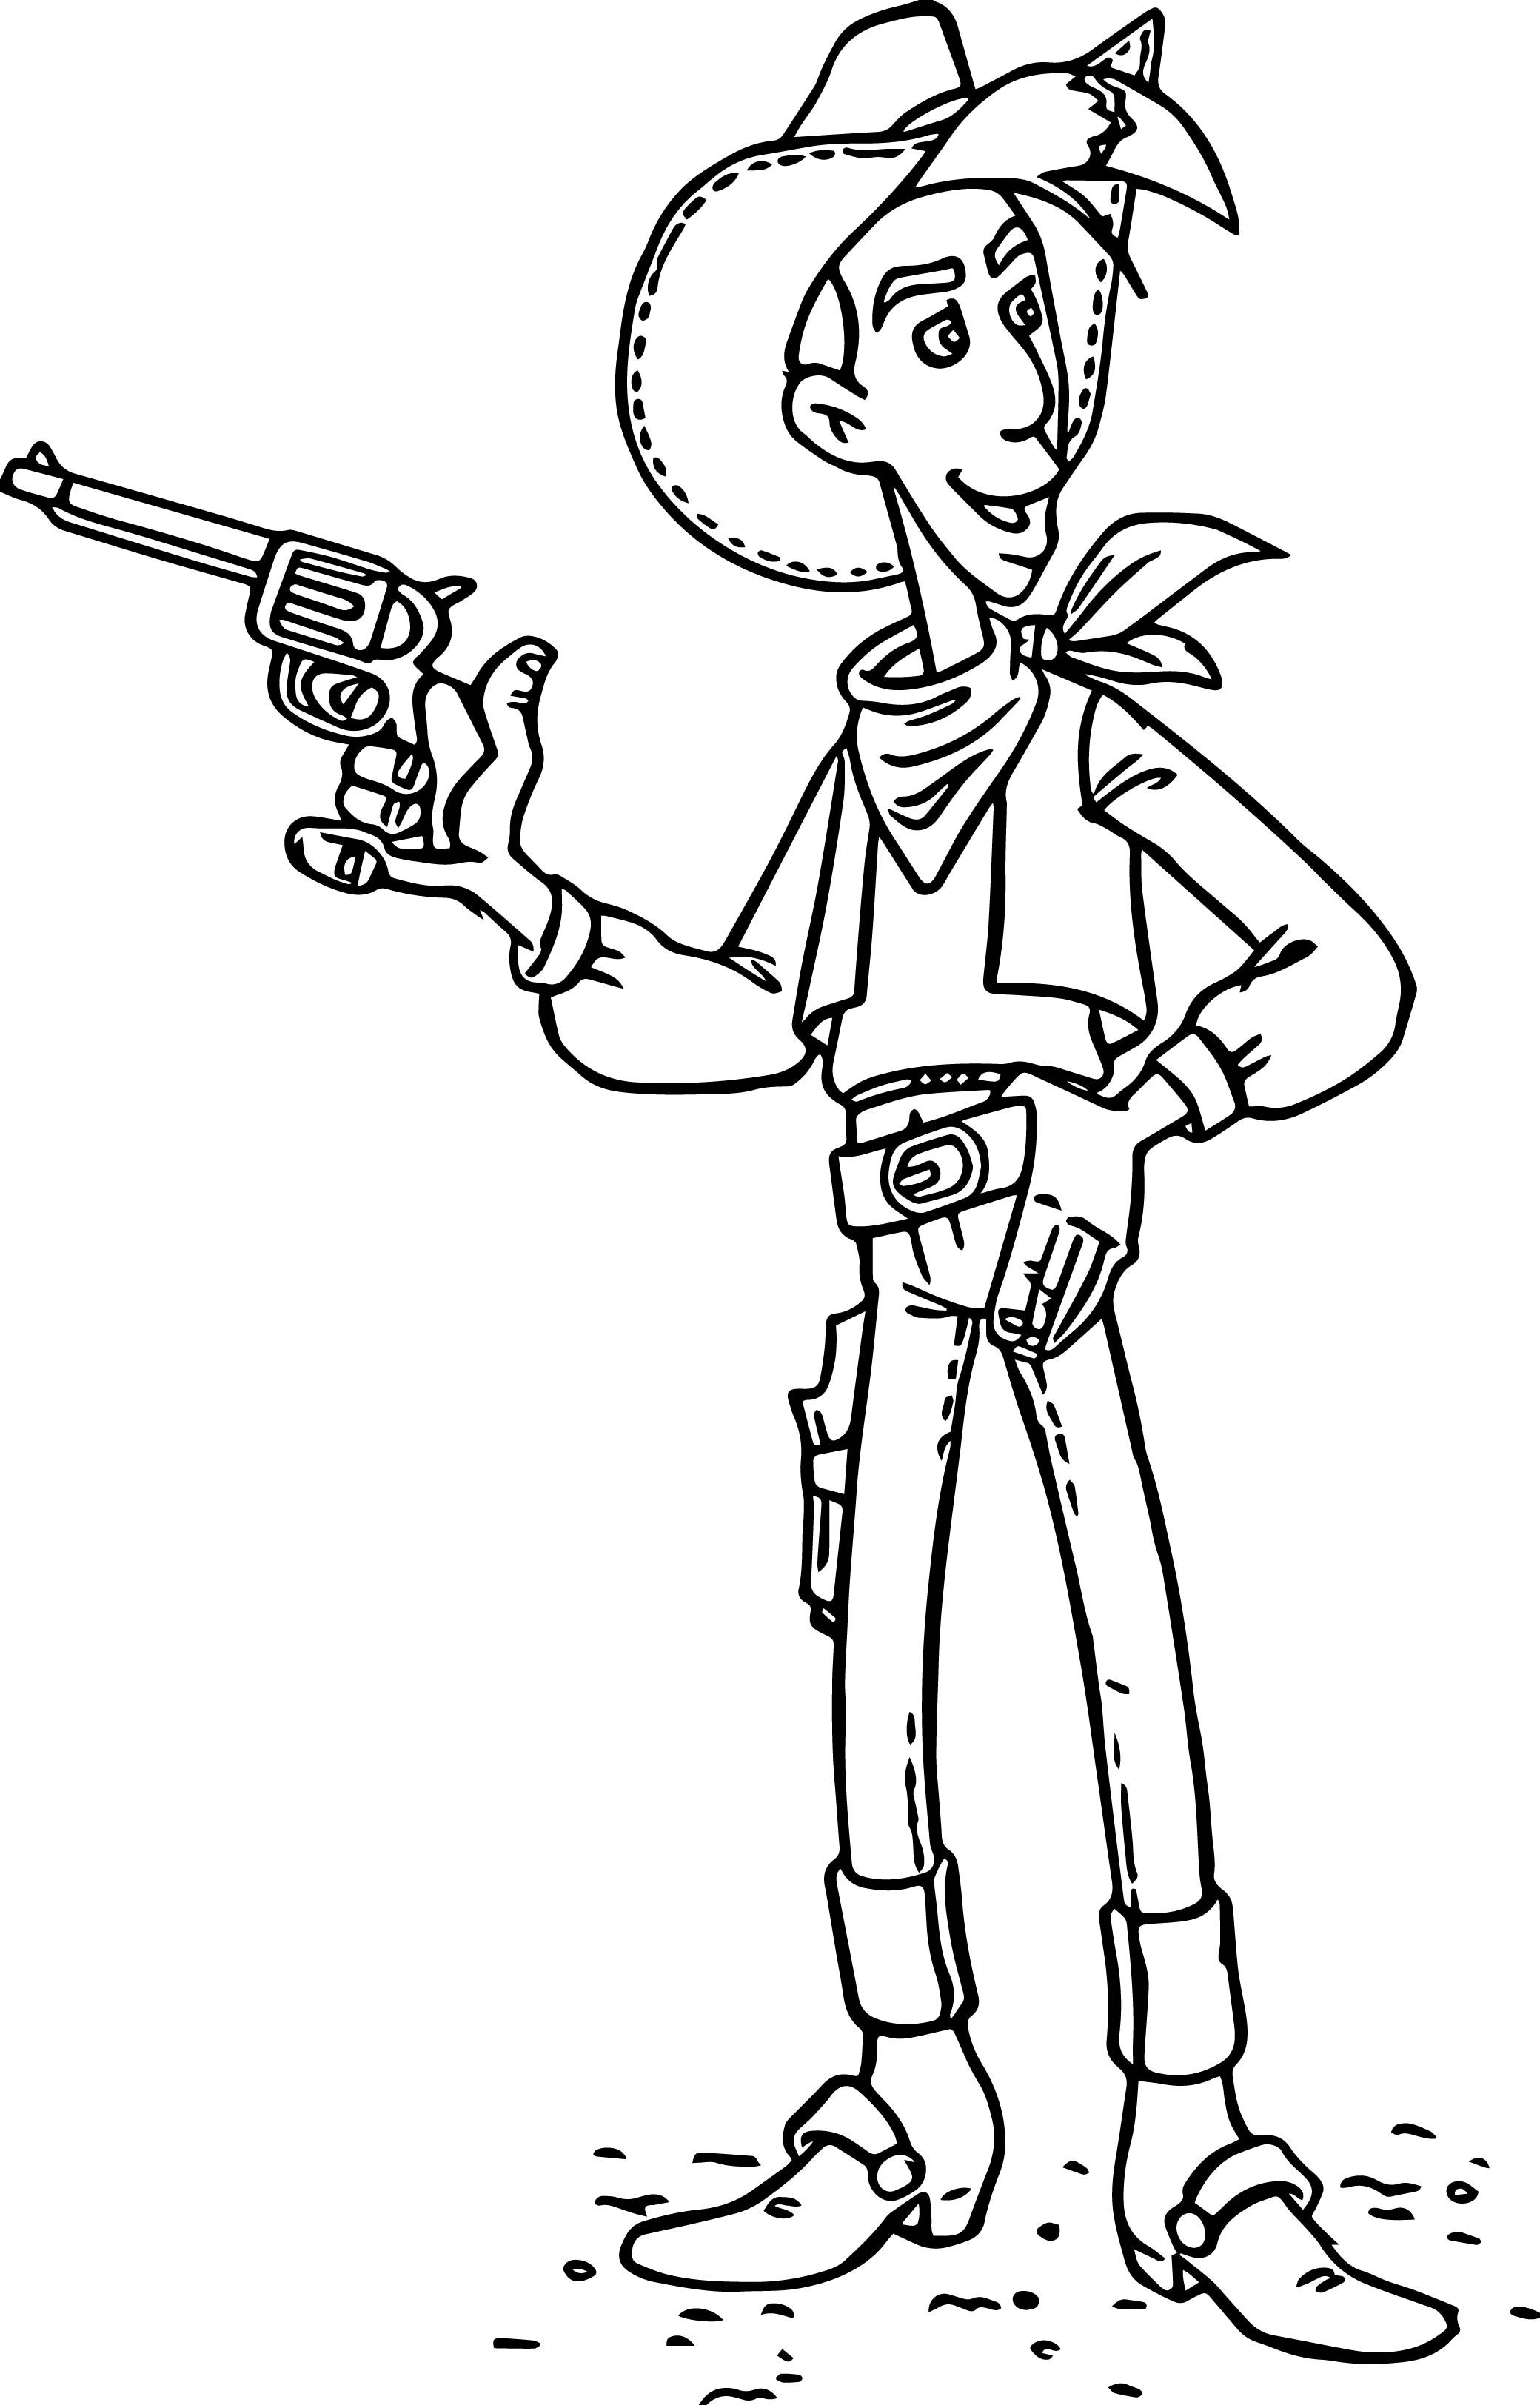 Lucky Luke Gun Coloring Page | Wecoloringpage